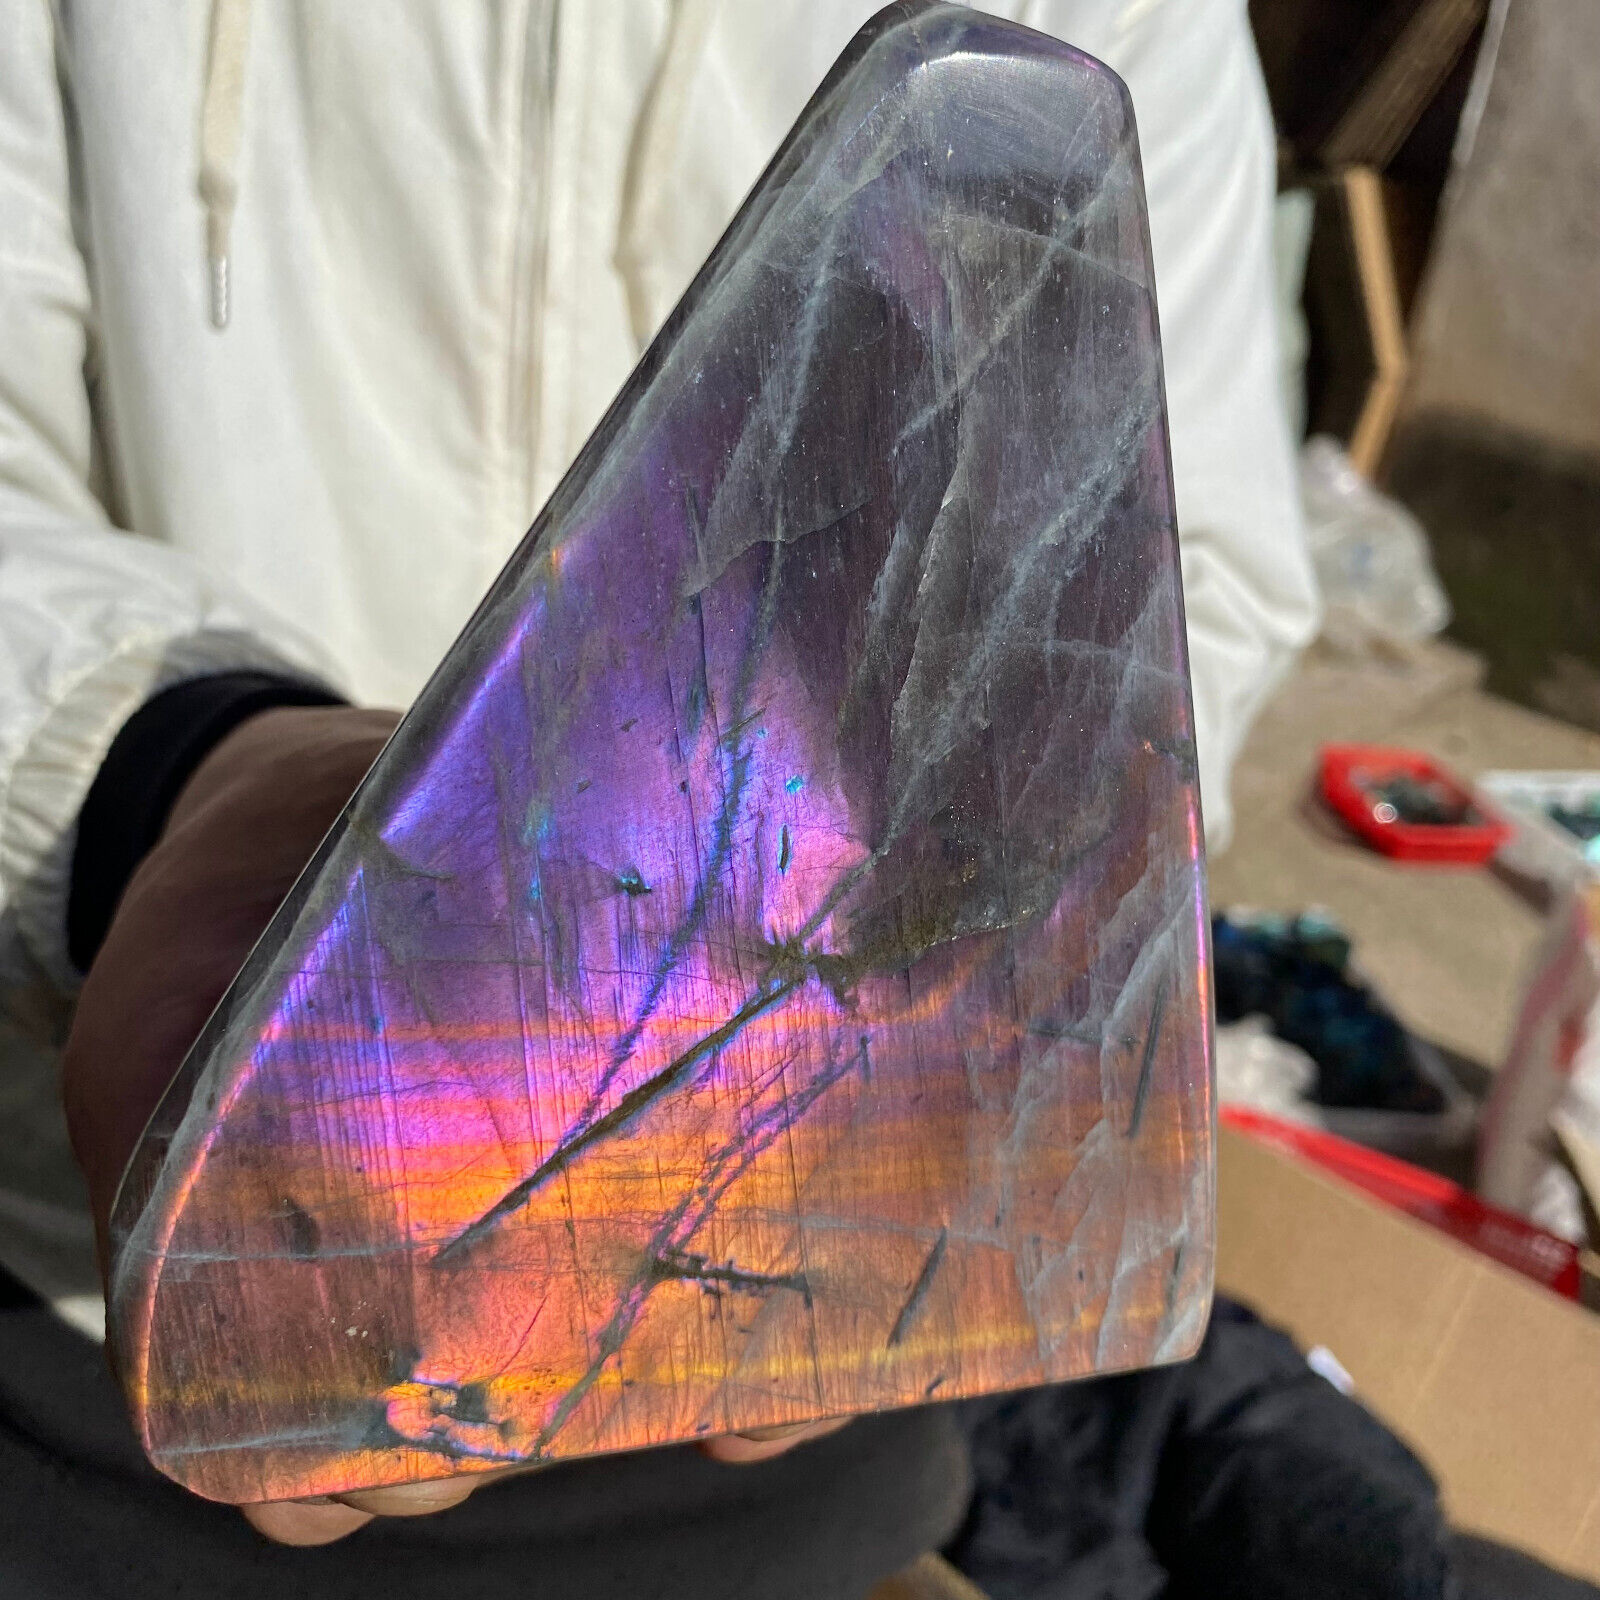 2.8lb Large Natural Labradorite Quartz Crystal Display Mineral Specimen Healing